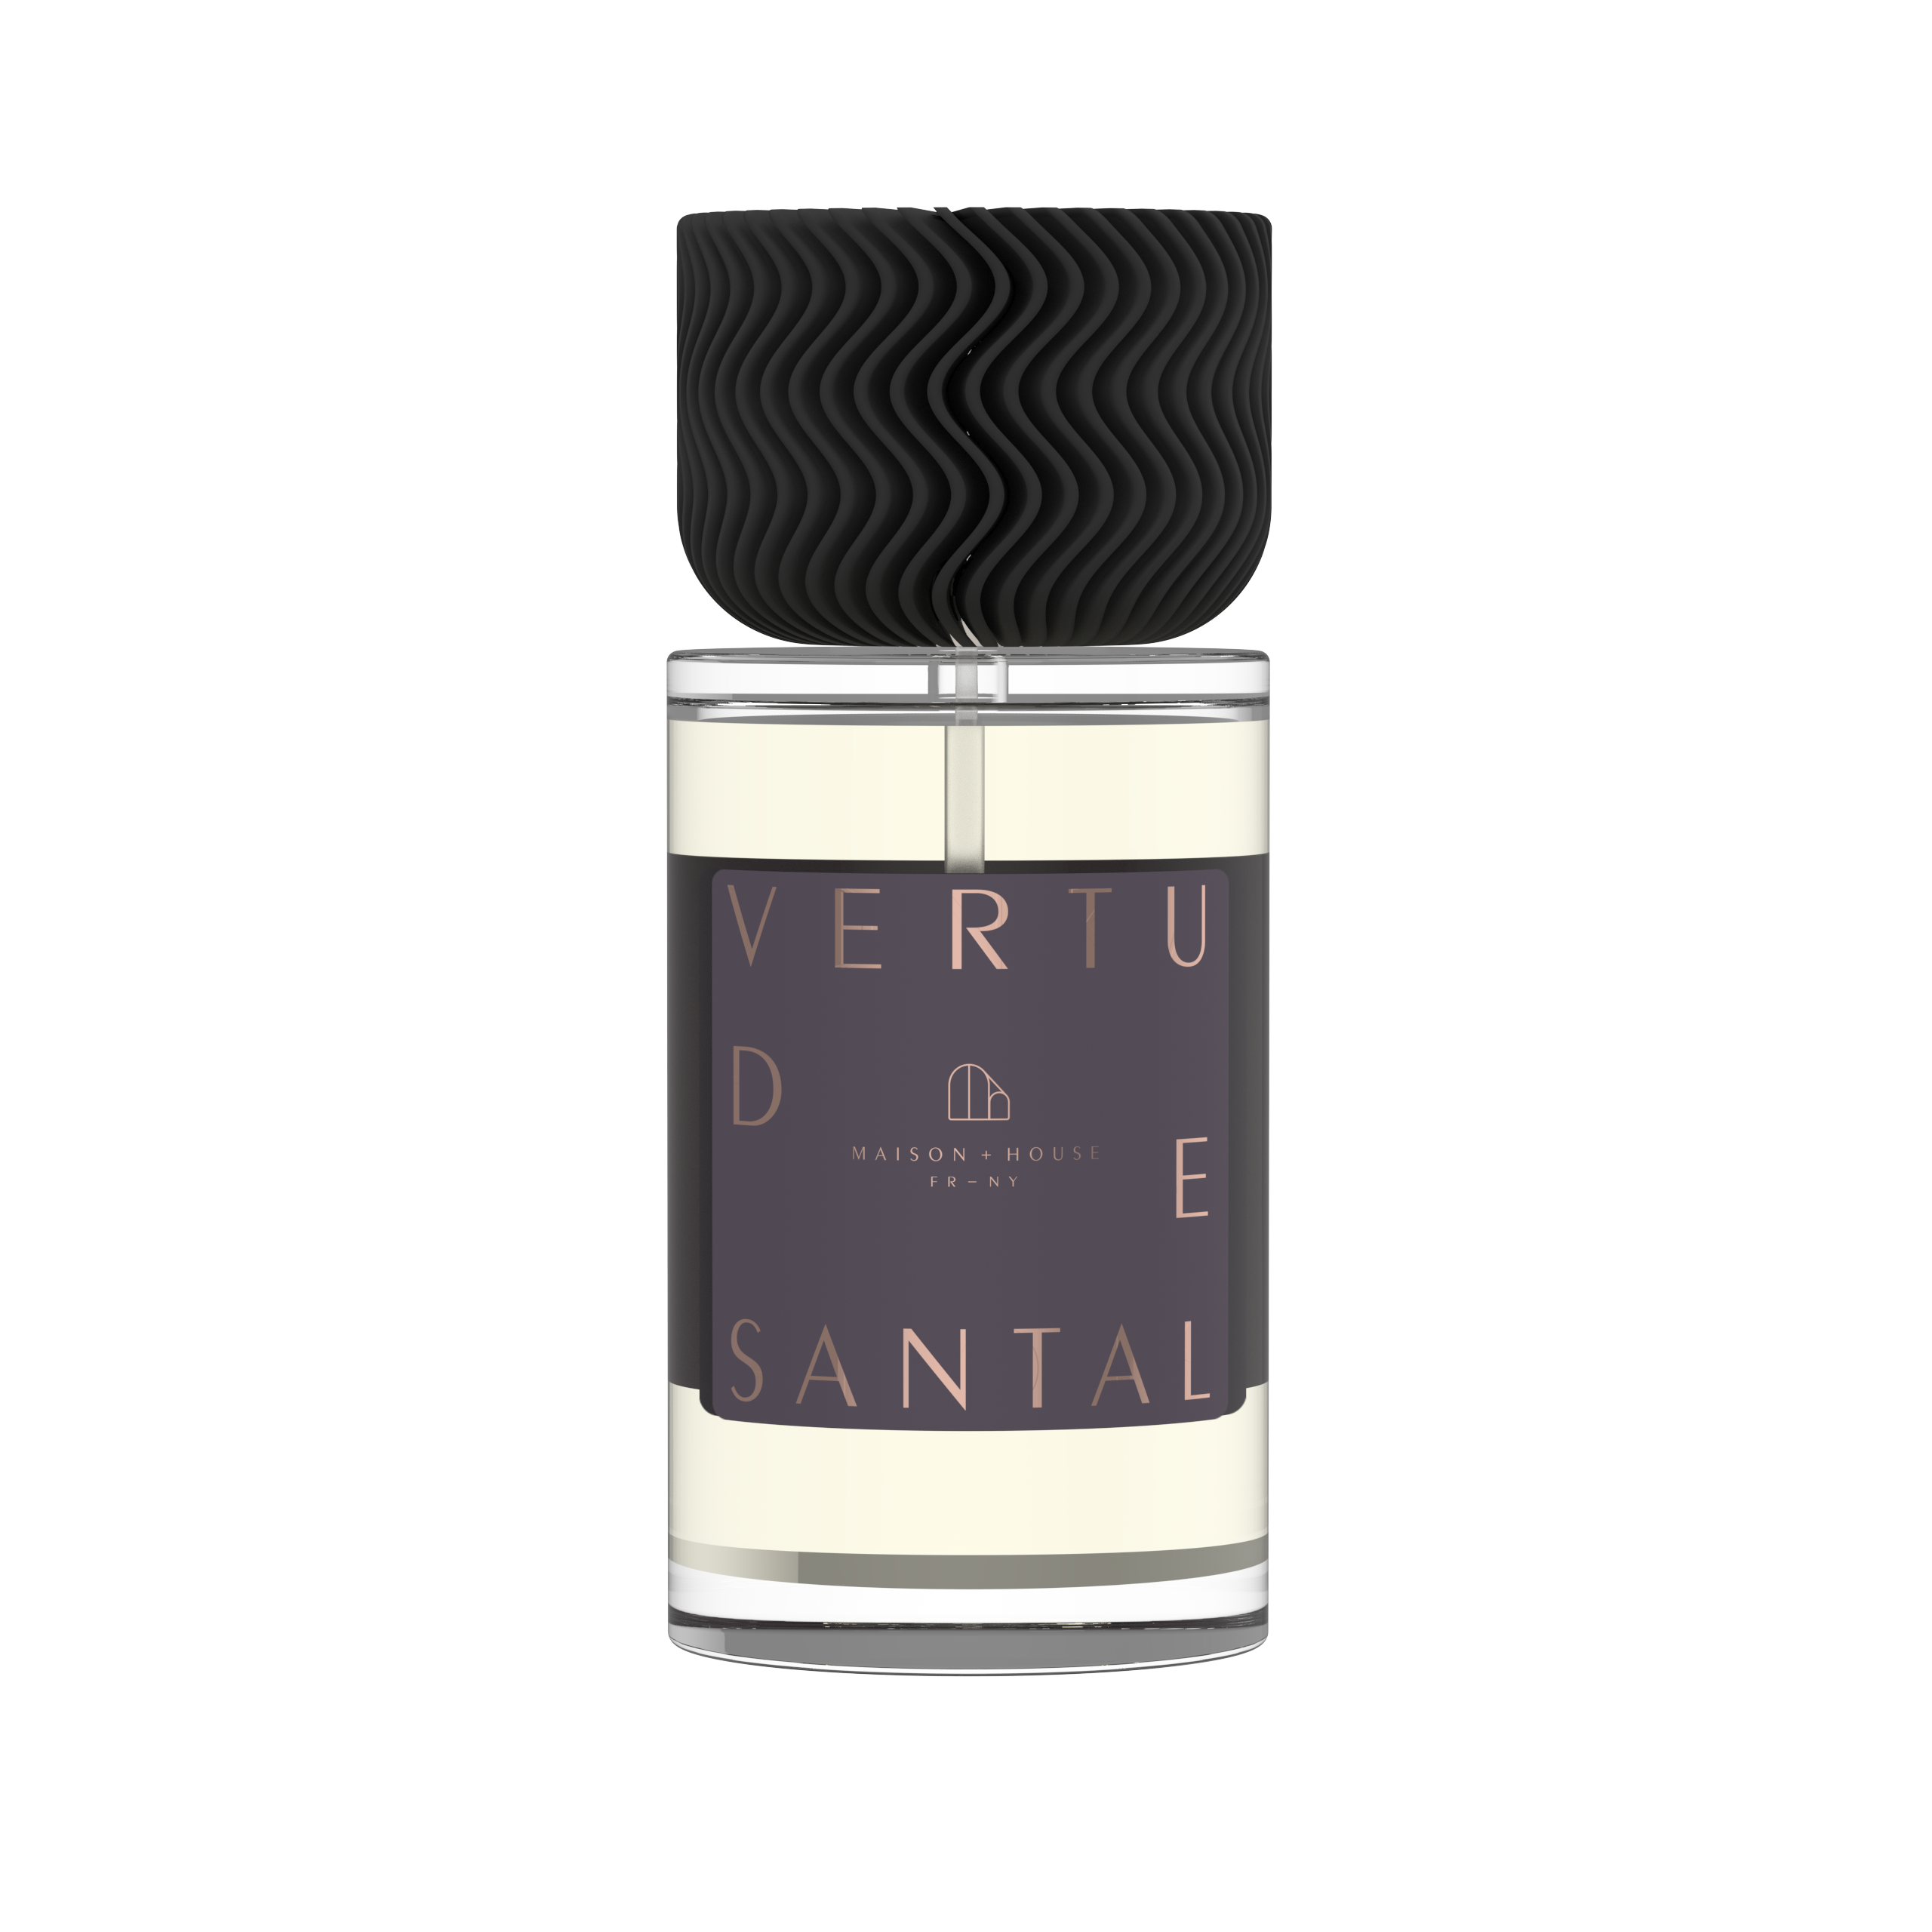 Vertu du Santal French-Fragrance Room / Linen Spray